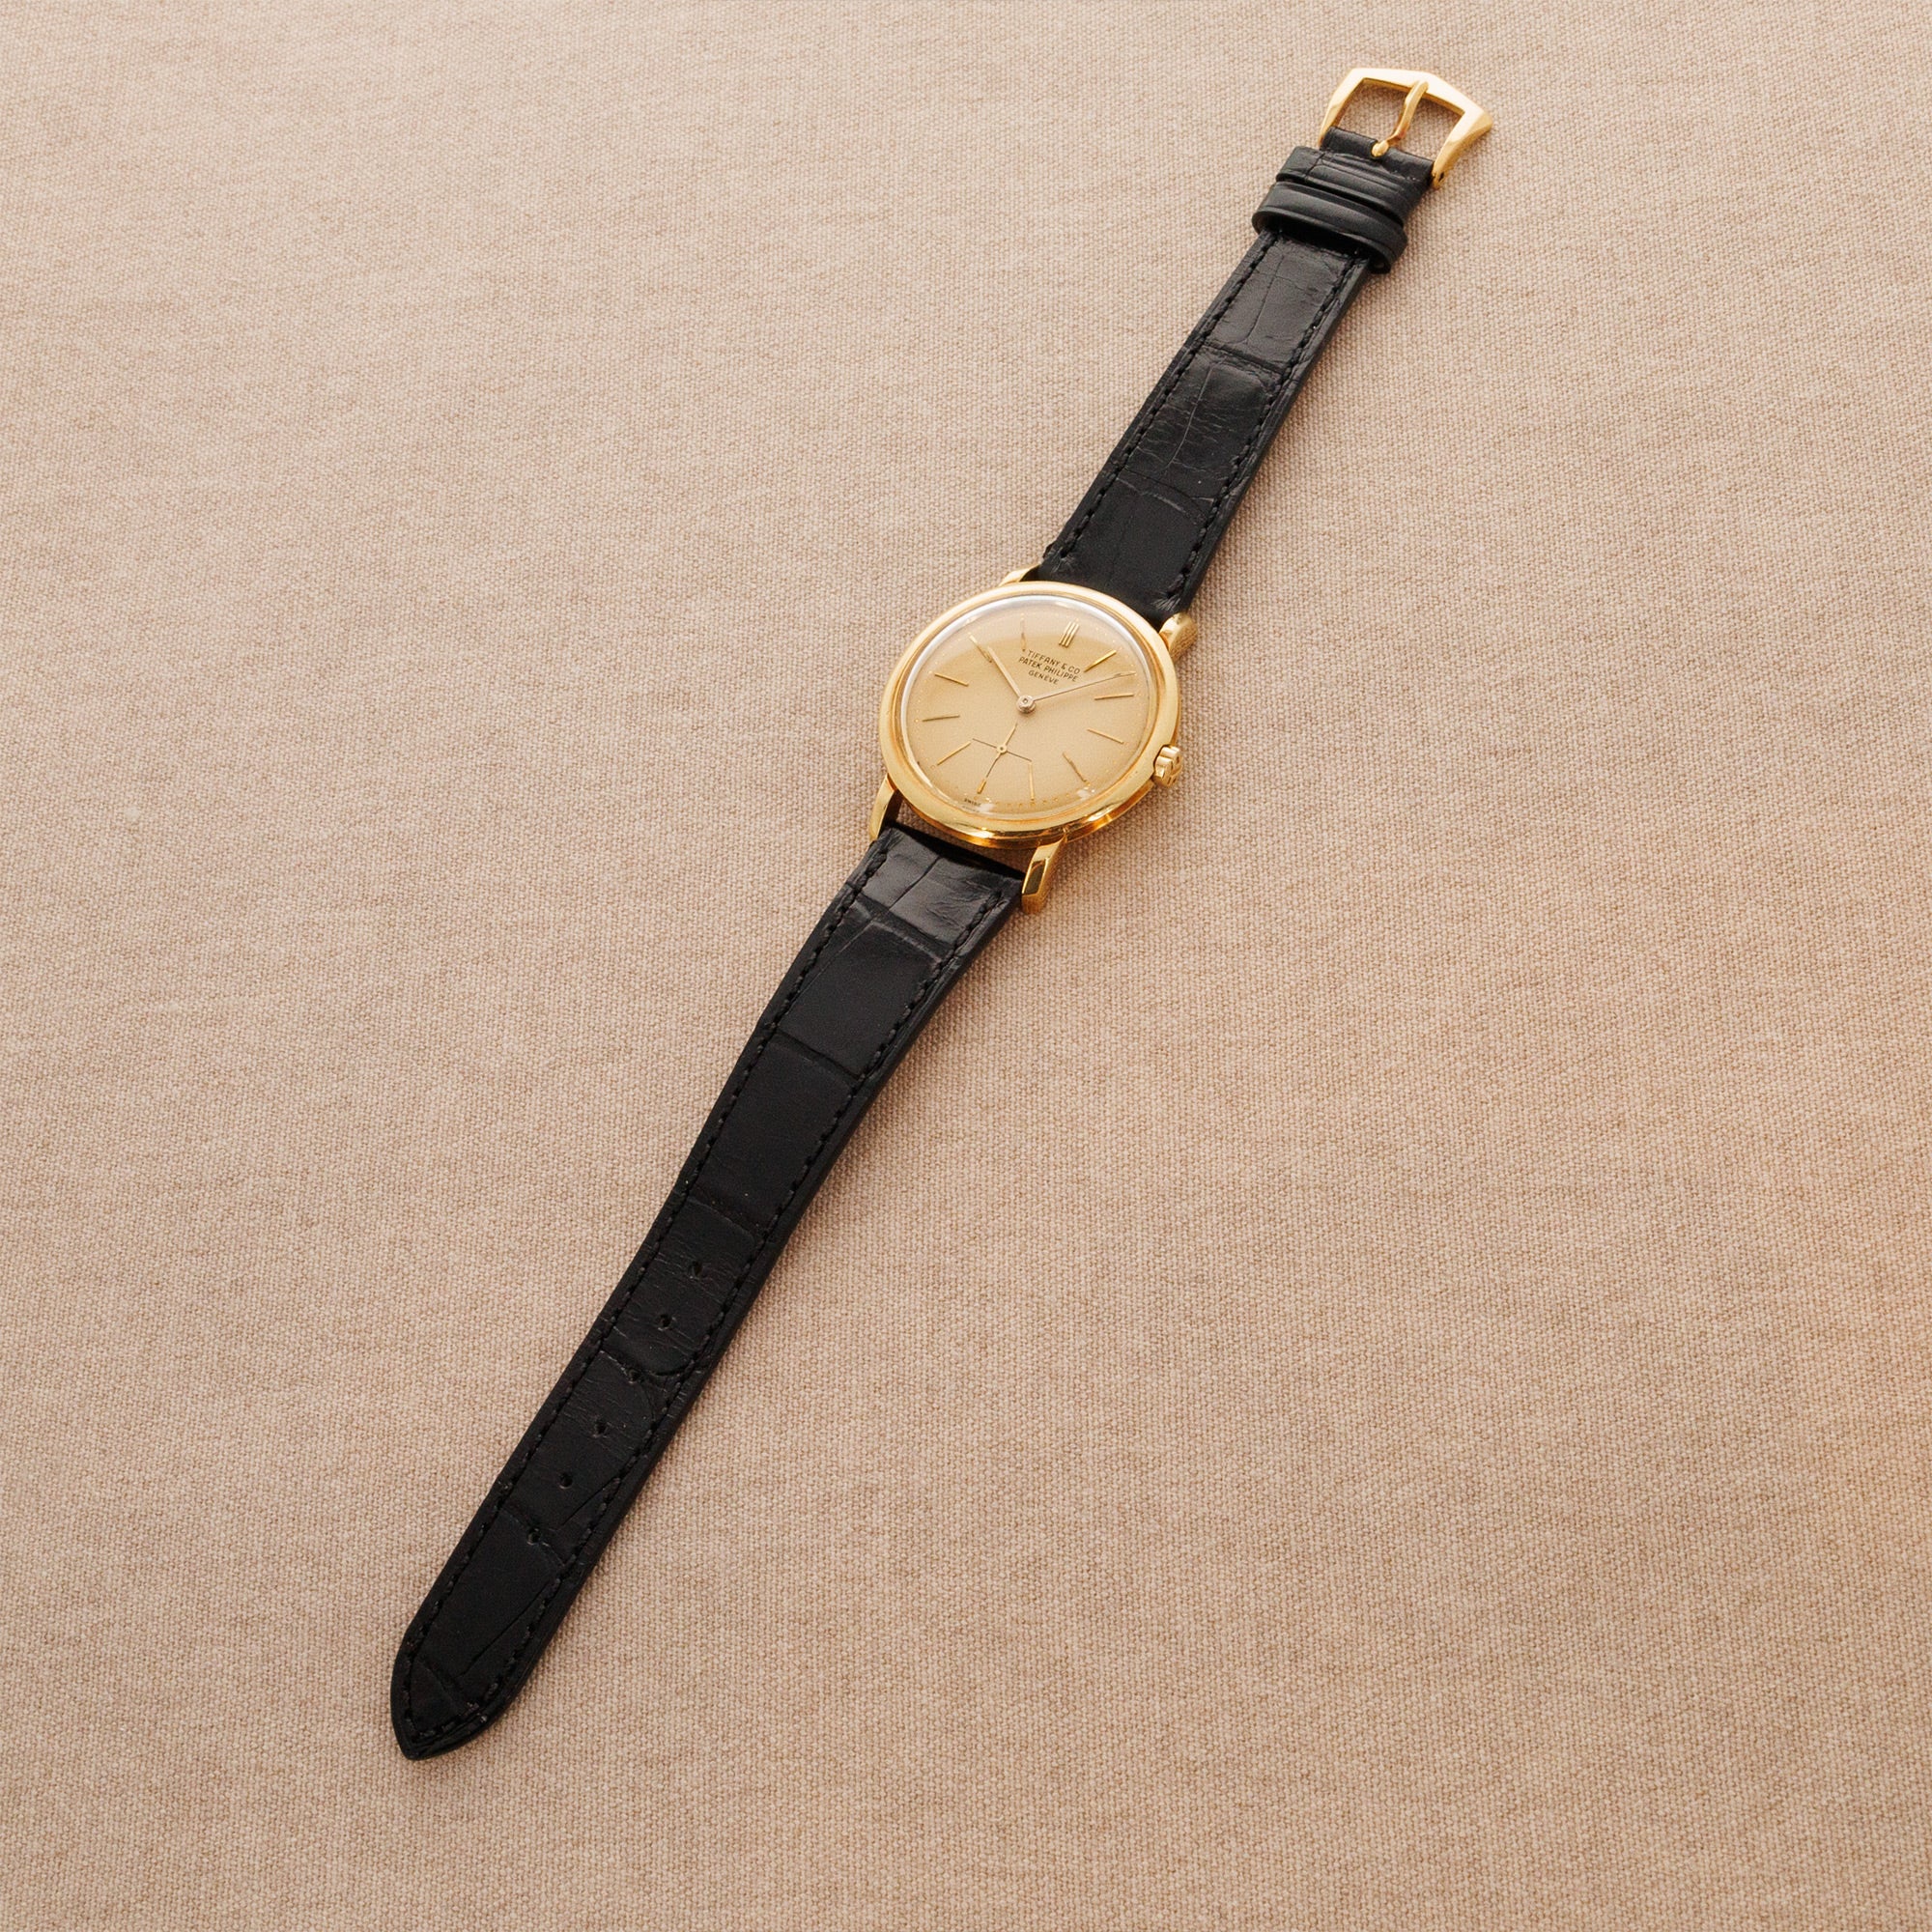 Patek Philippe - Patek Philippe Yellow Gold Calatrava Watch Ref. 3440, Retailed by Tiffany &amp; Co. - The Keystone Watches